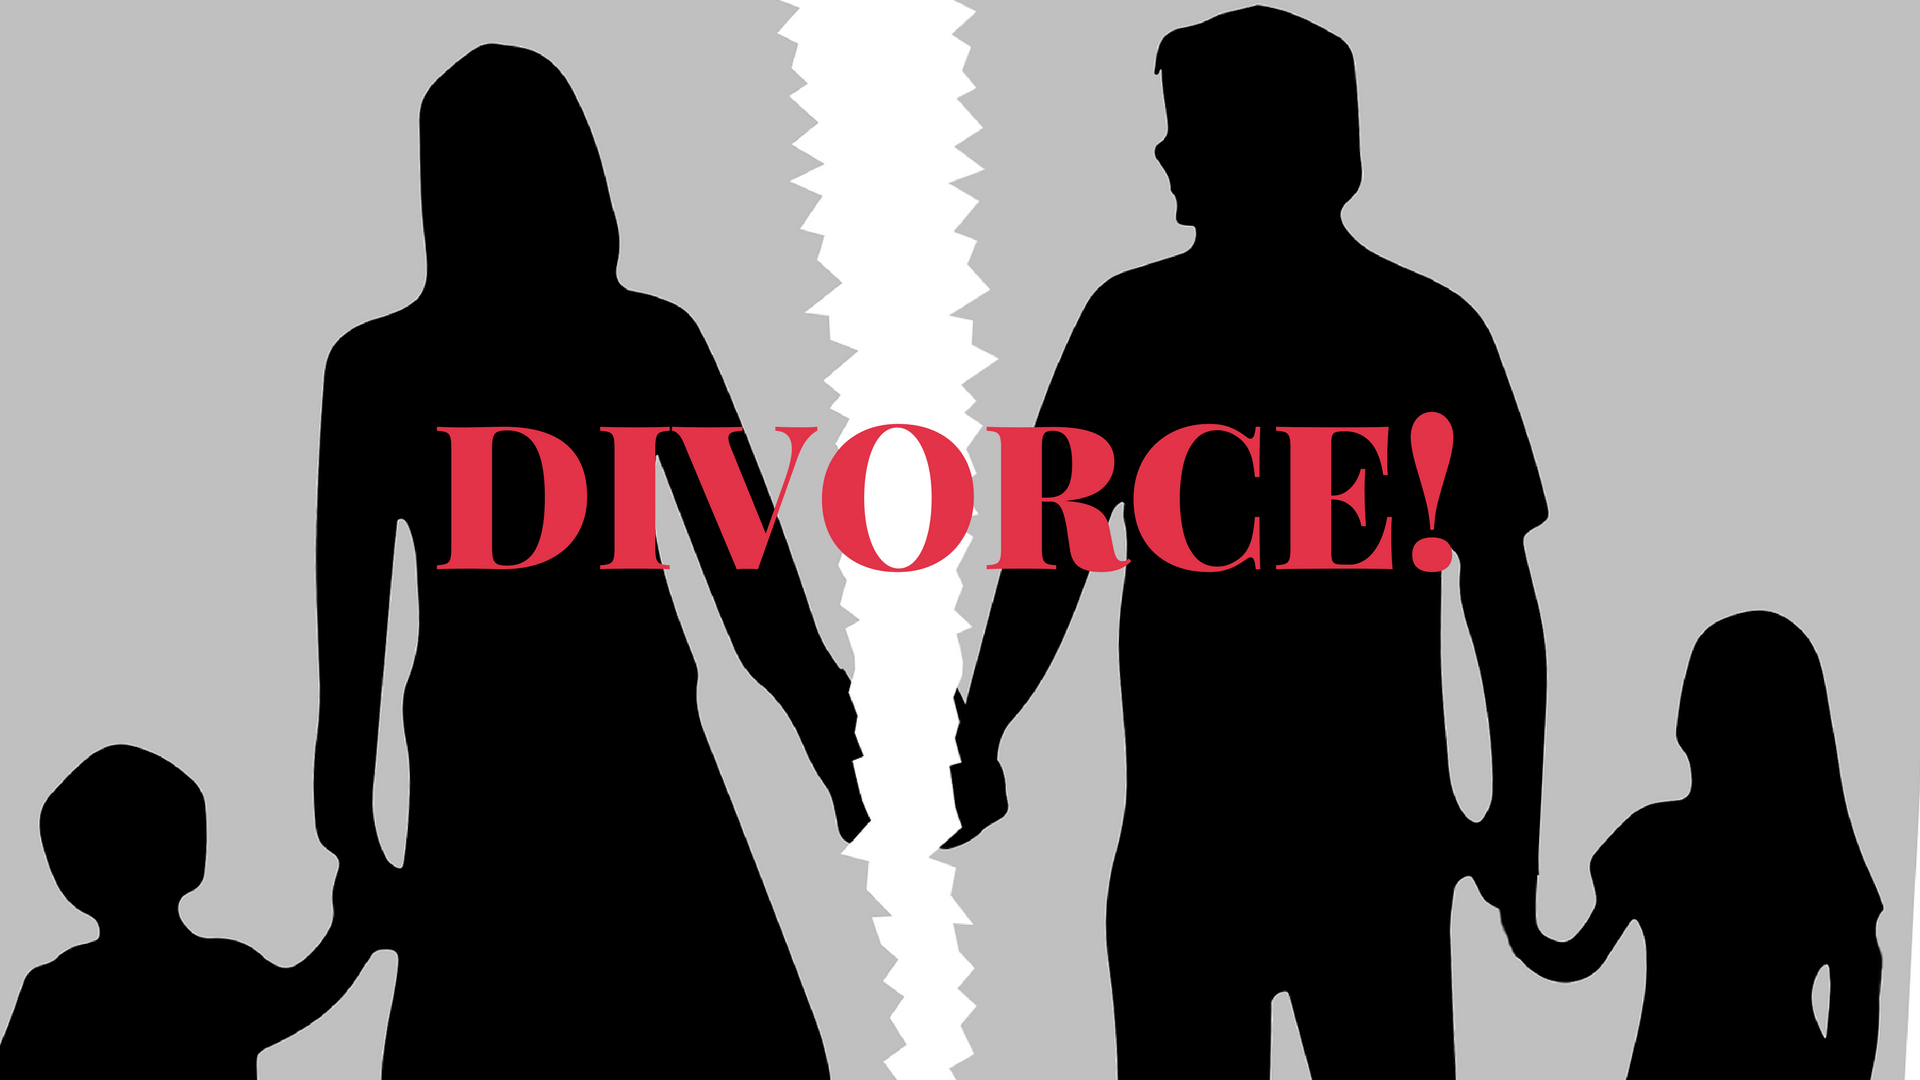 DIVORCE! Not Private - Pixabay - Canva